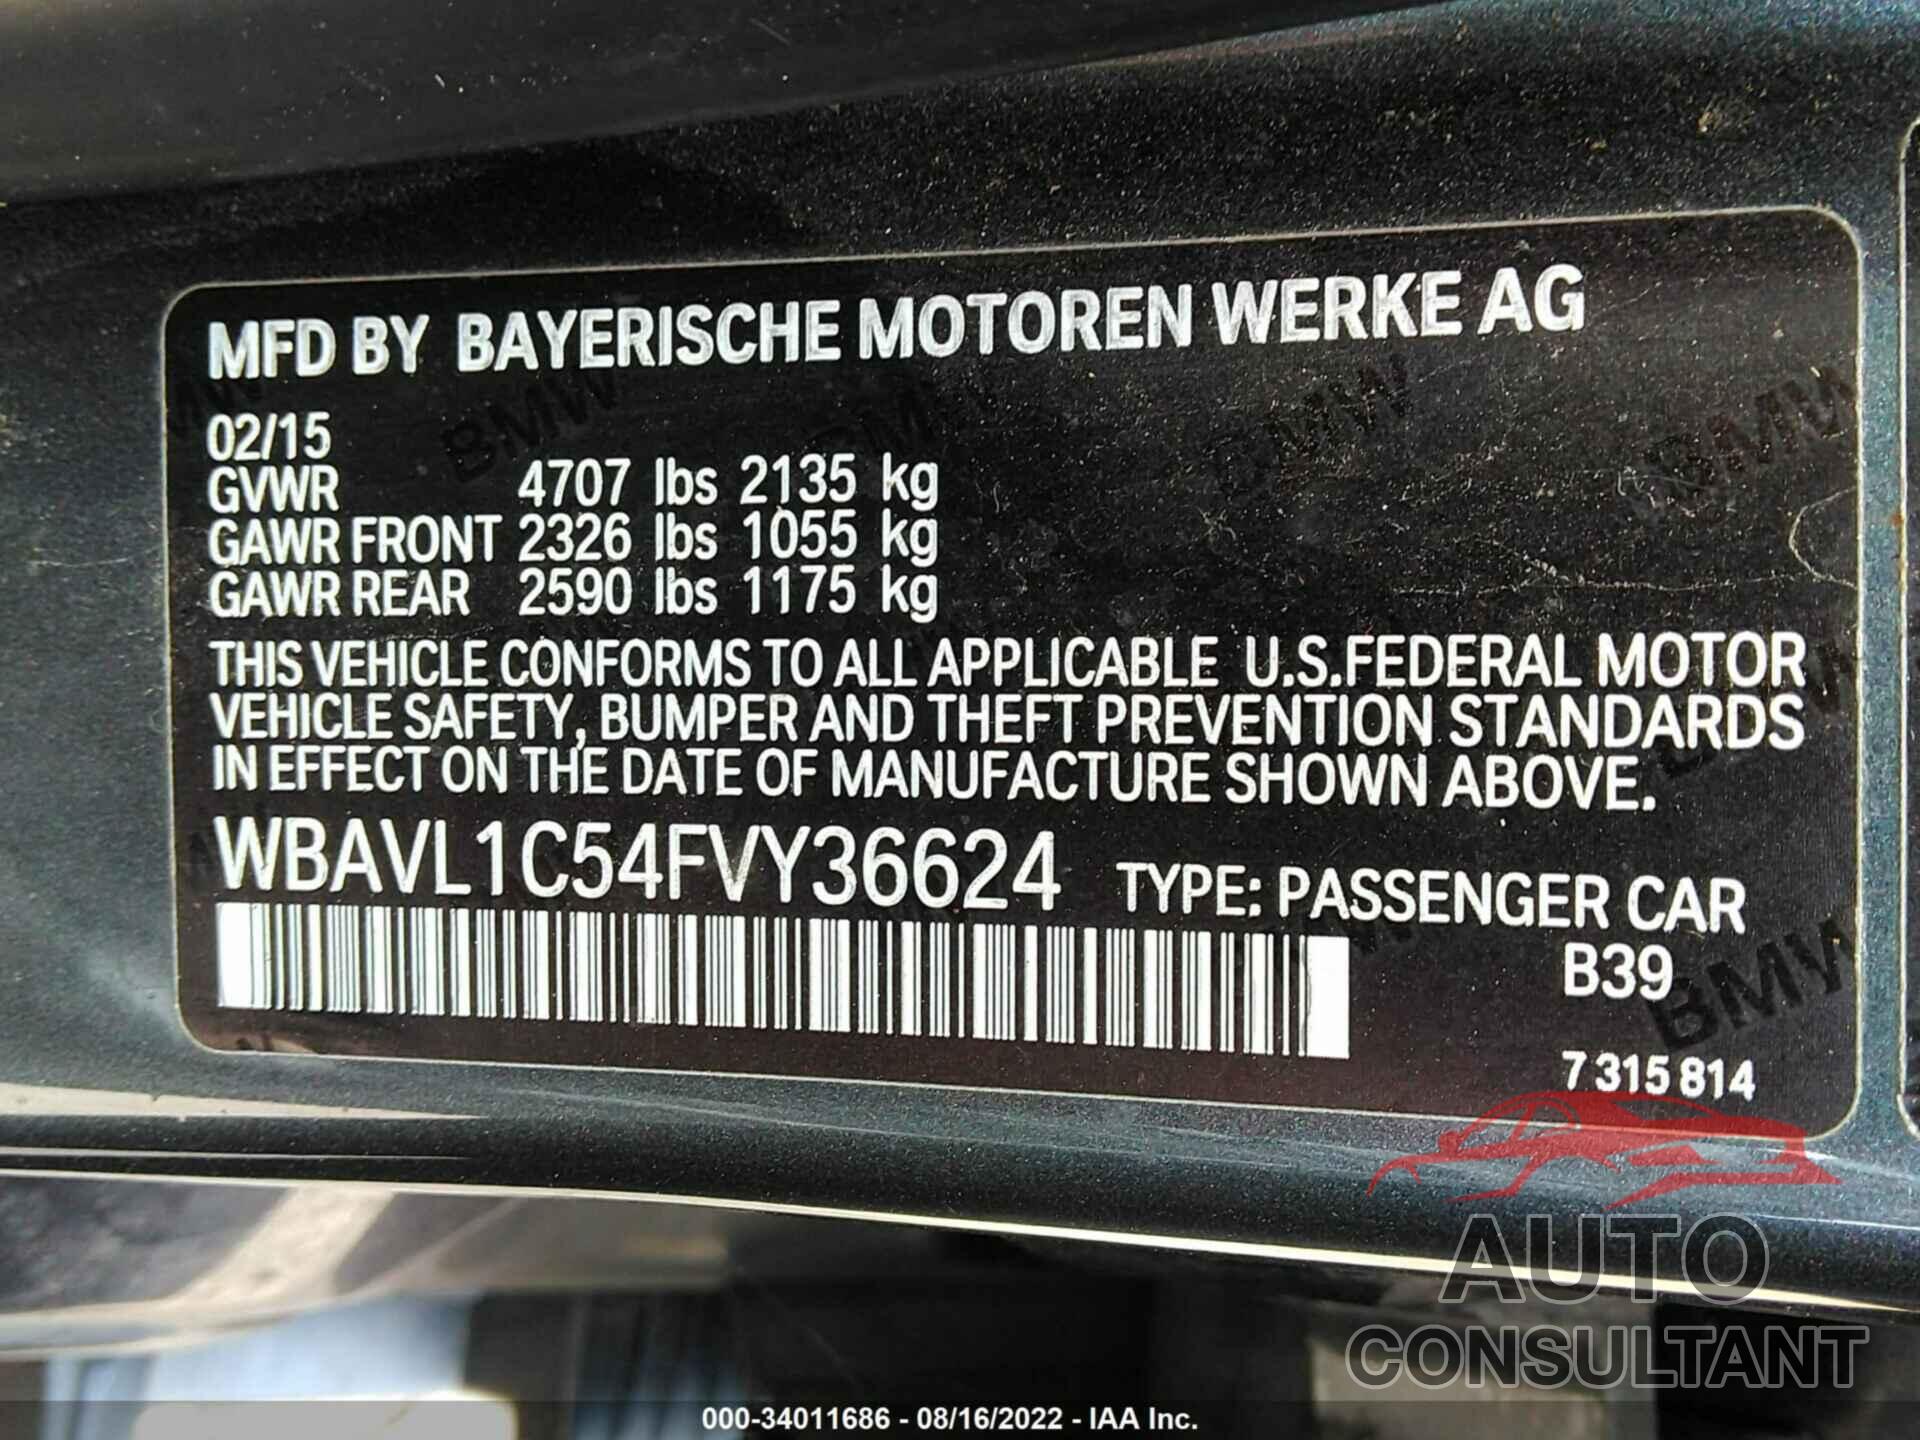 BMW X1 2015 - WBAVL1C54FVY36624